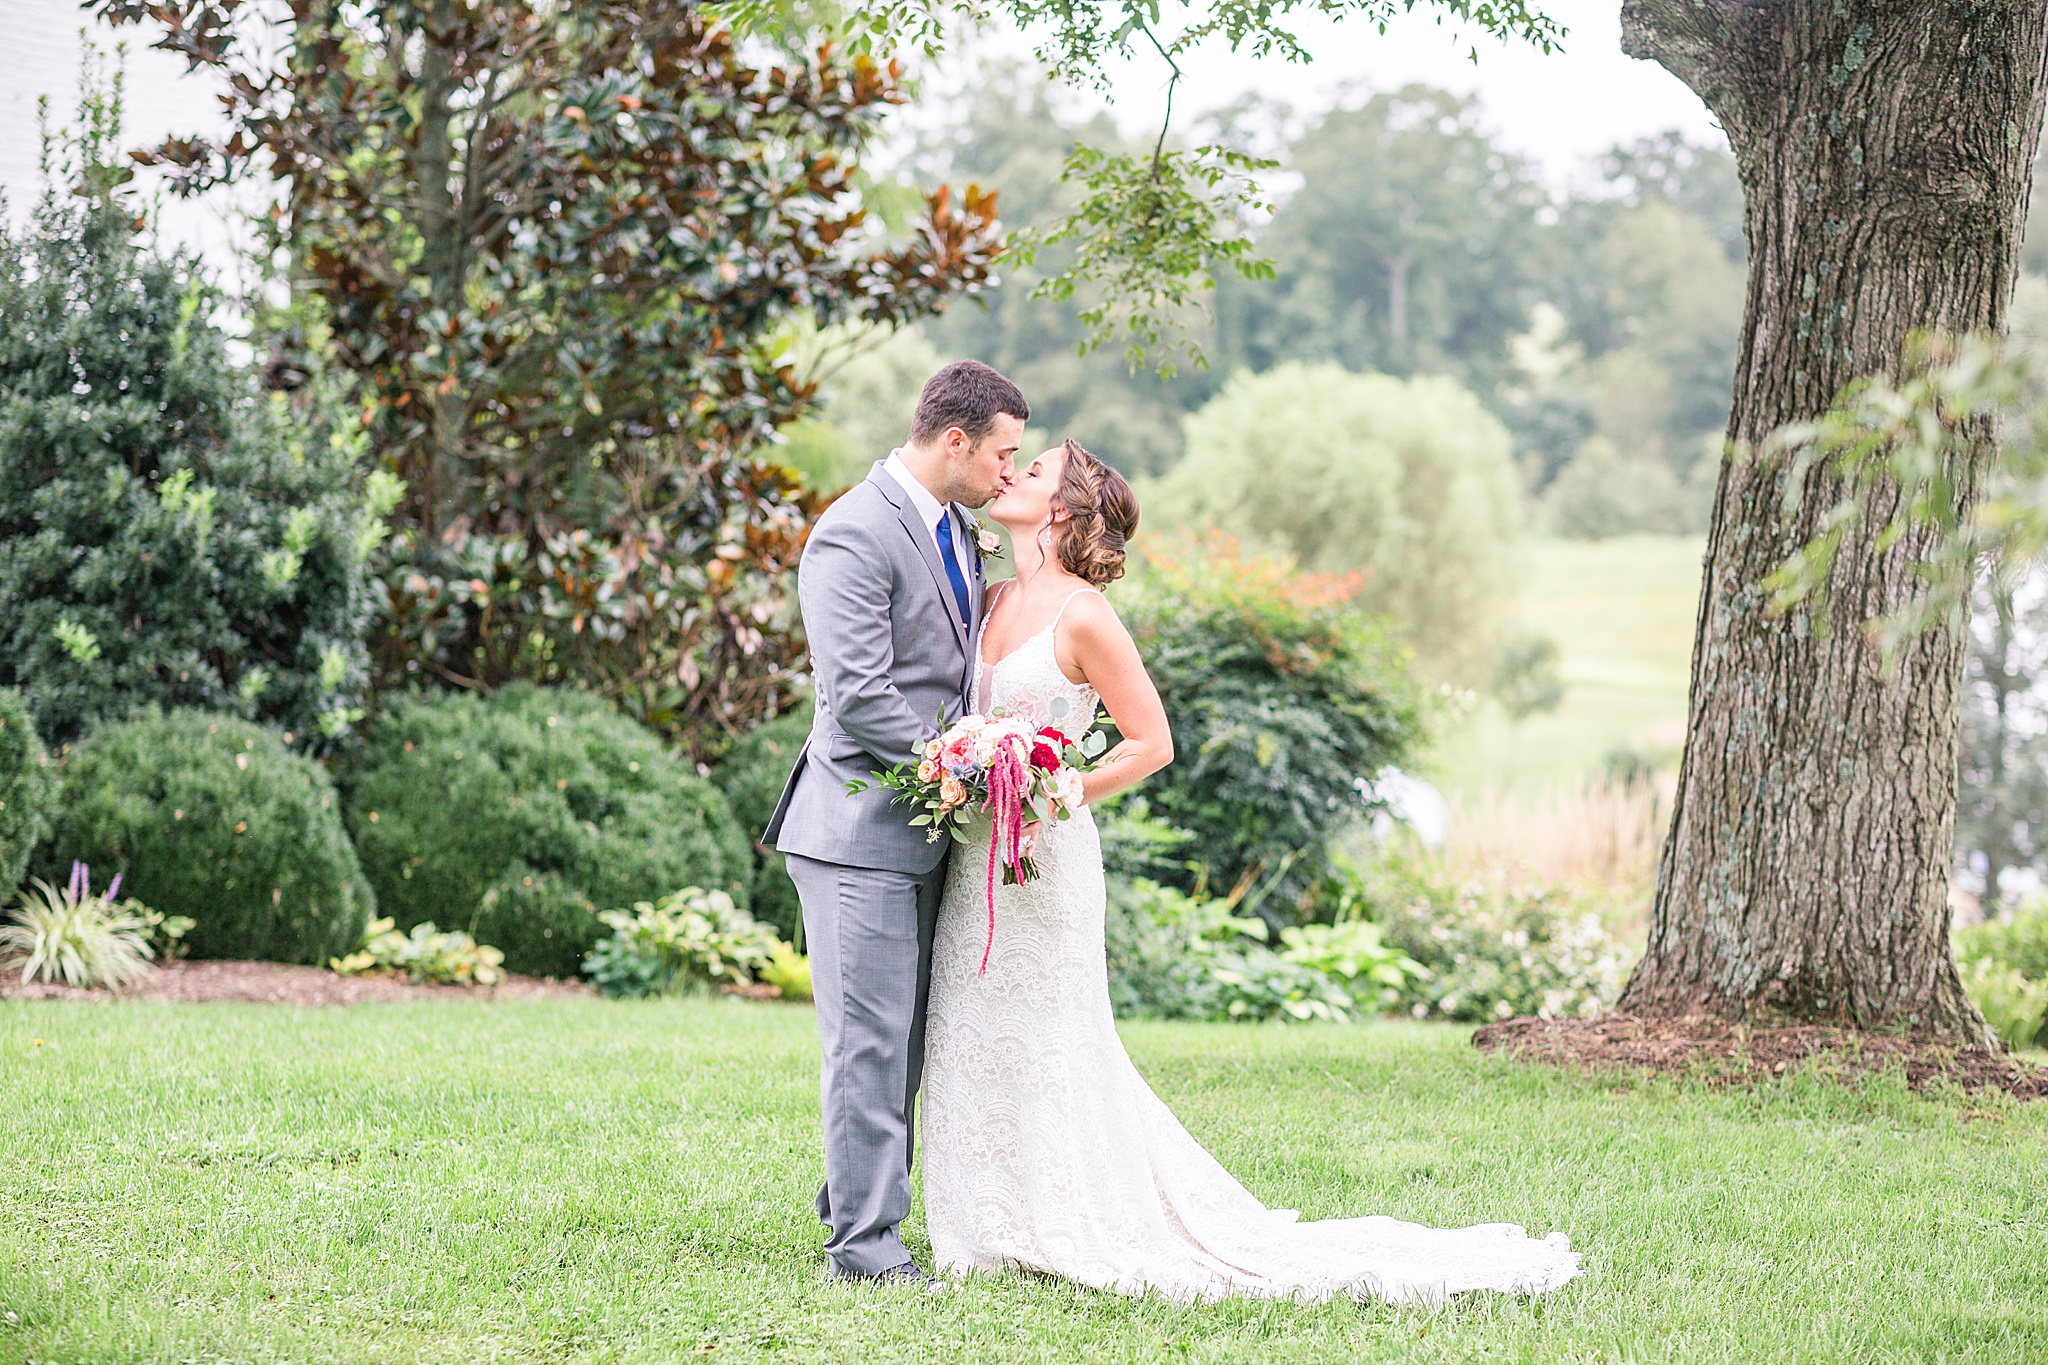 Alexandra Mandato Photography photographs bride and groom at Glen Ellen farm